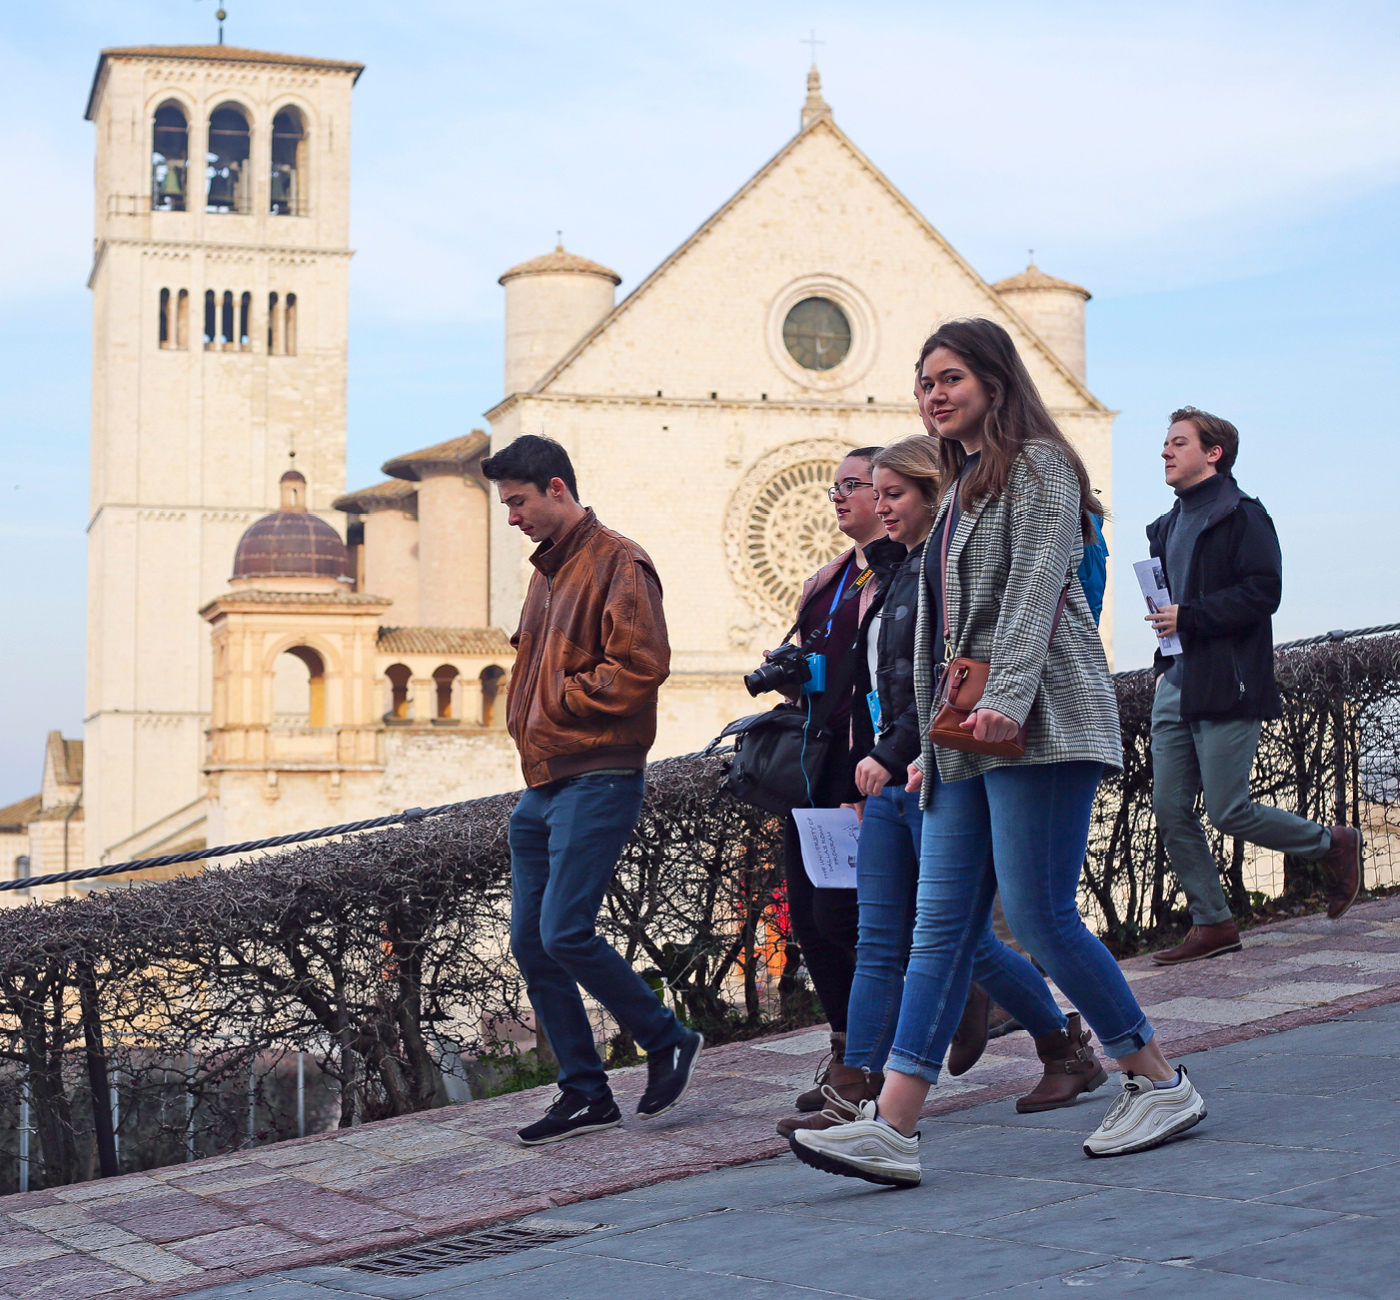 Students walking in Spain